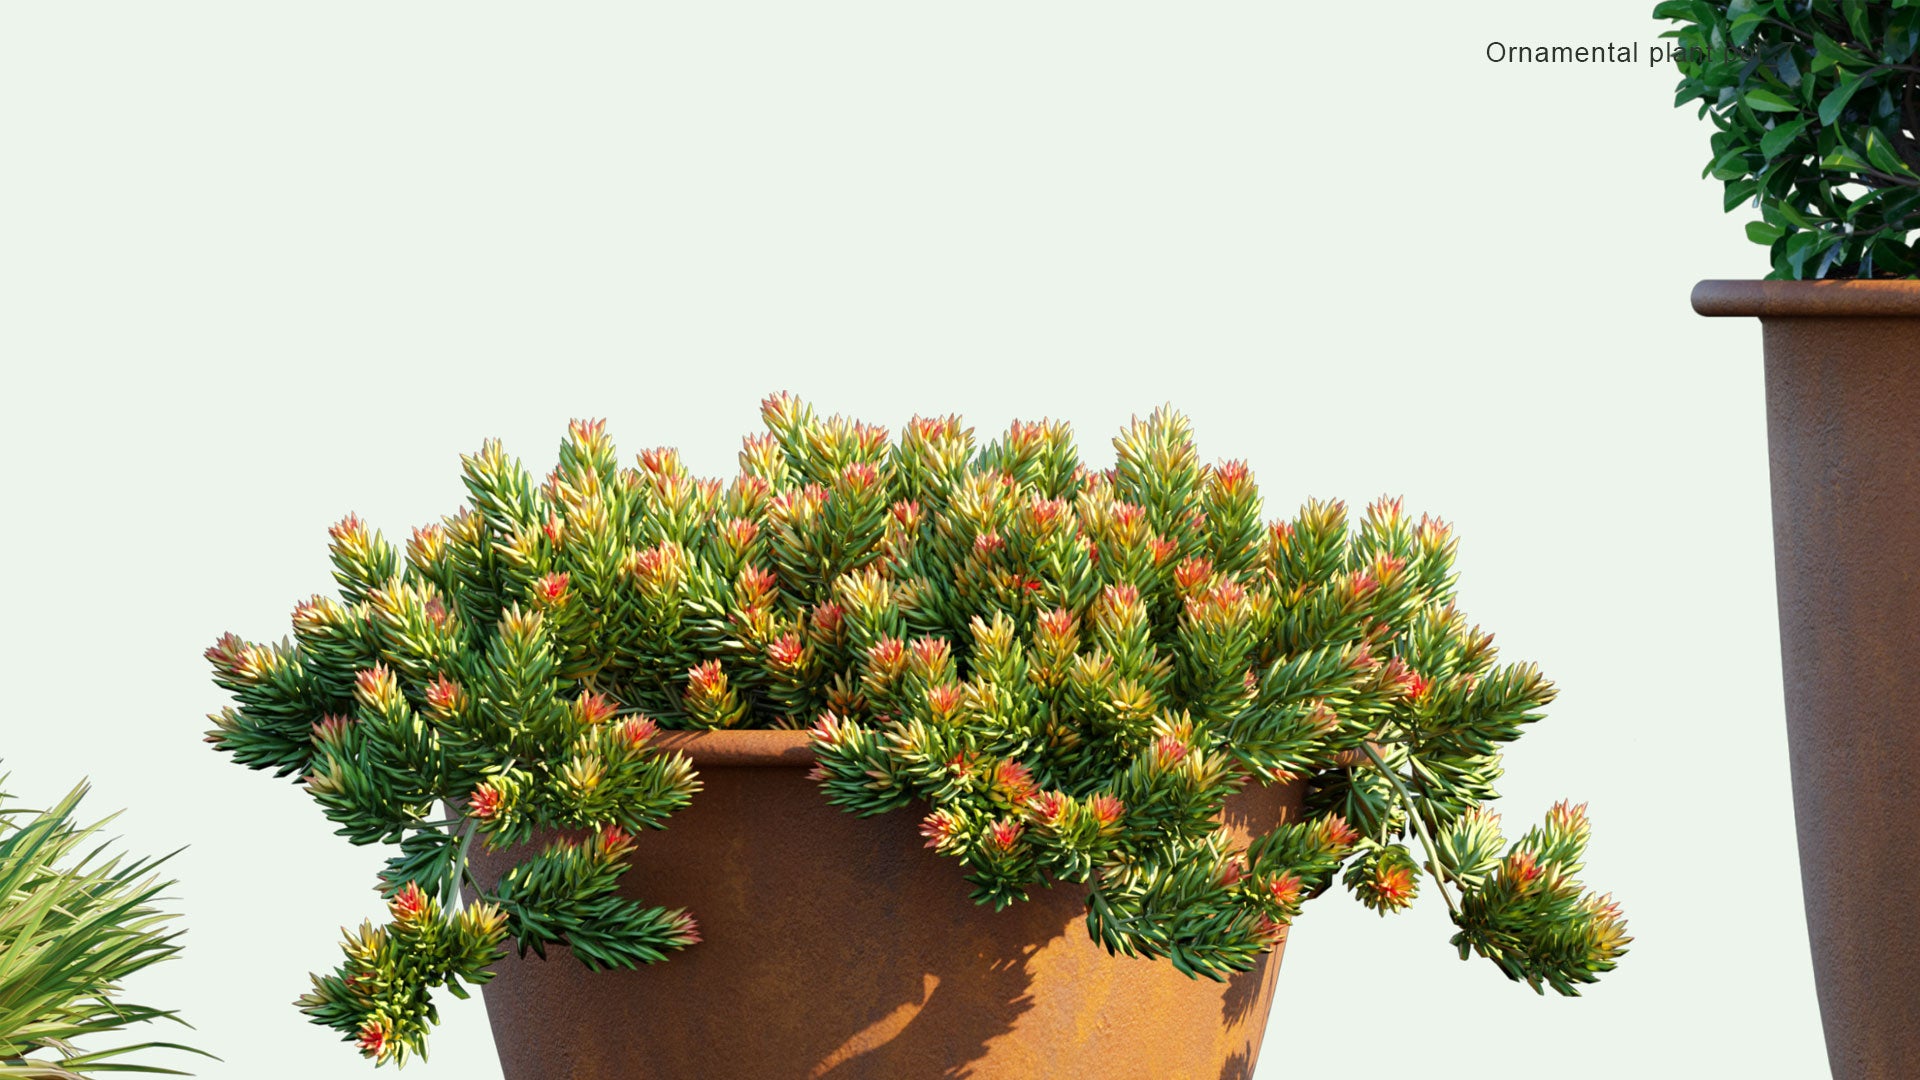 2D Ornamental Pot Plant 07 - Pittosporum Tobira, Dianella Tasmanica, Sedum Rupestre 'Angelina'